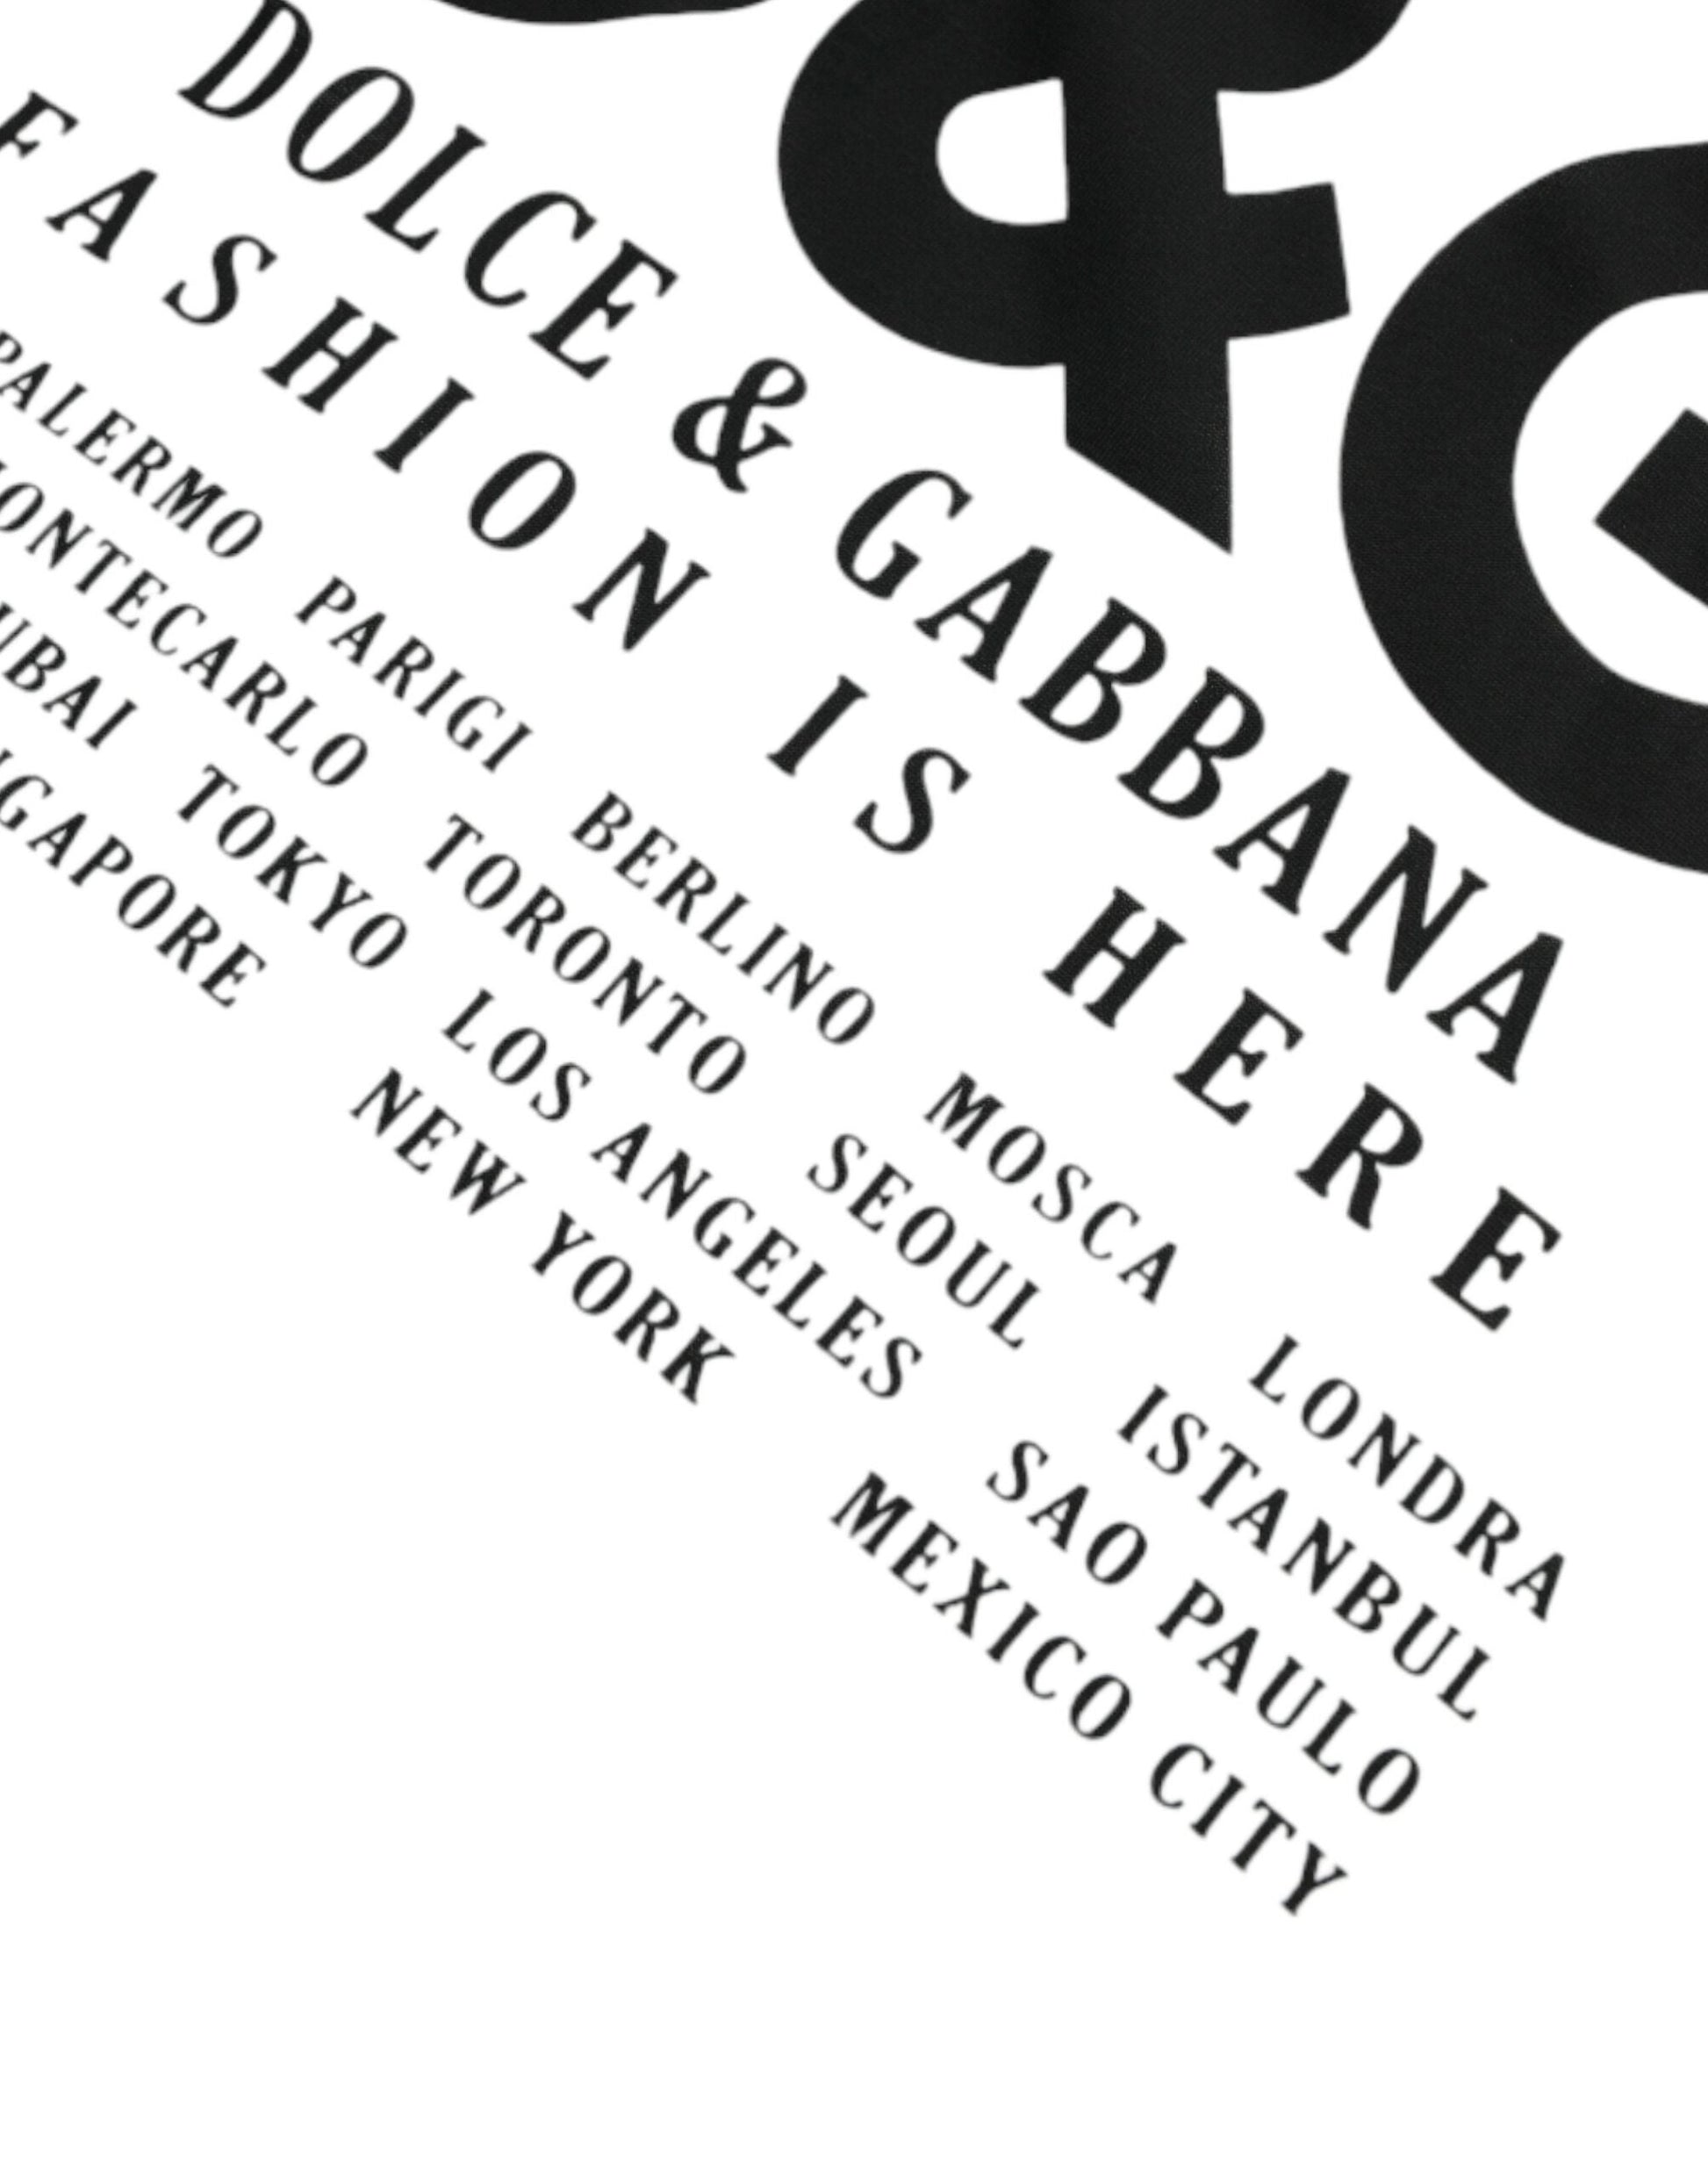 Dolce & Gabbana White Graphic Print Cotton Crew Neck T-shirt | Fashionsarah.com